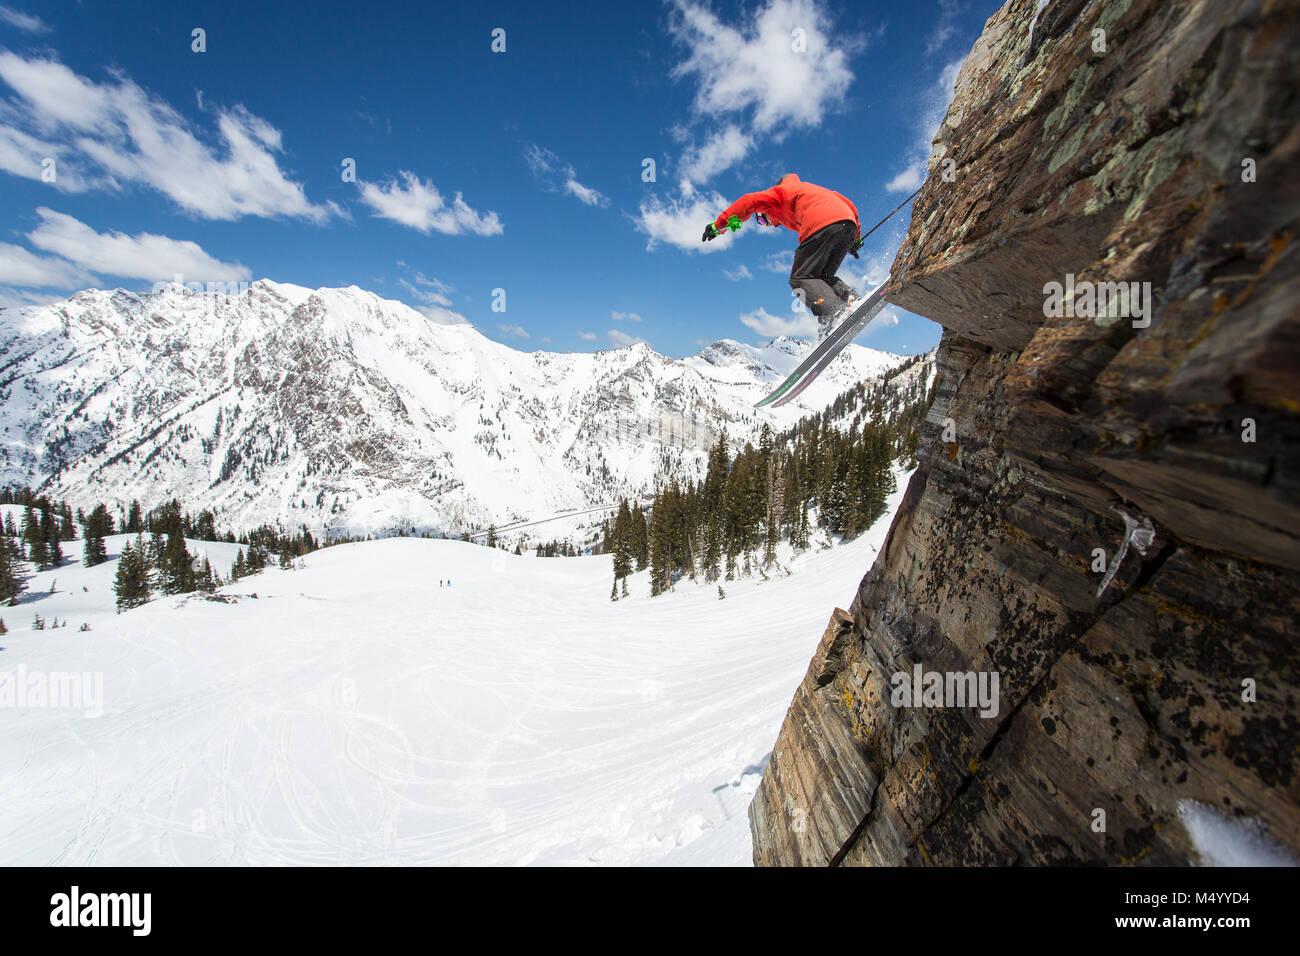 Skier jumping off cliff against snowcapped mountain range, Utah, USA Stock Photo